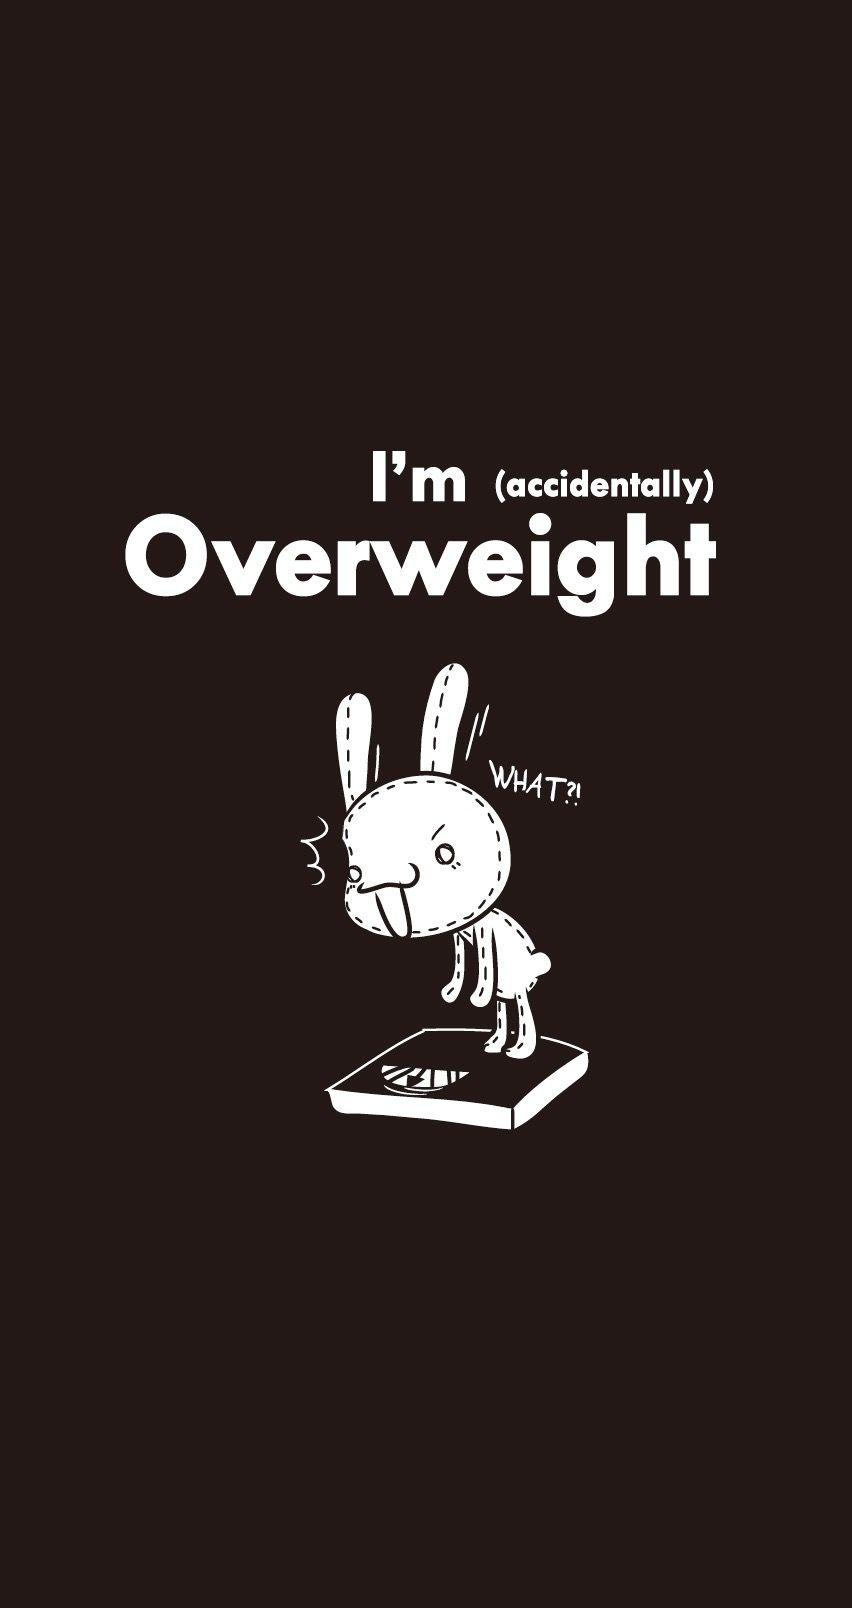 Accidentally Overweight (whaaat?!?!) hahaha. Wallpaper